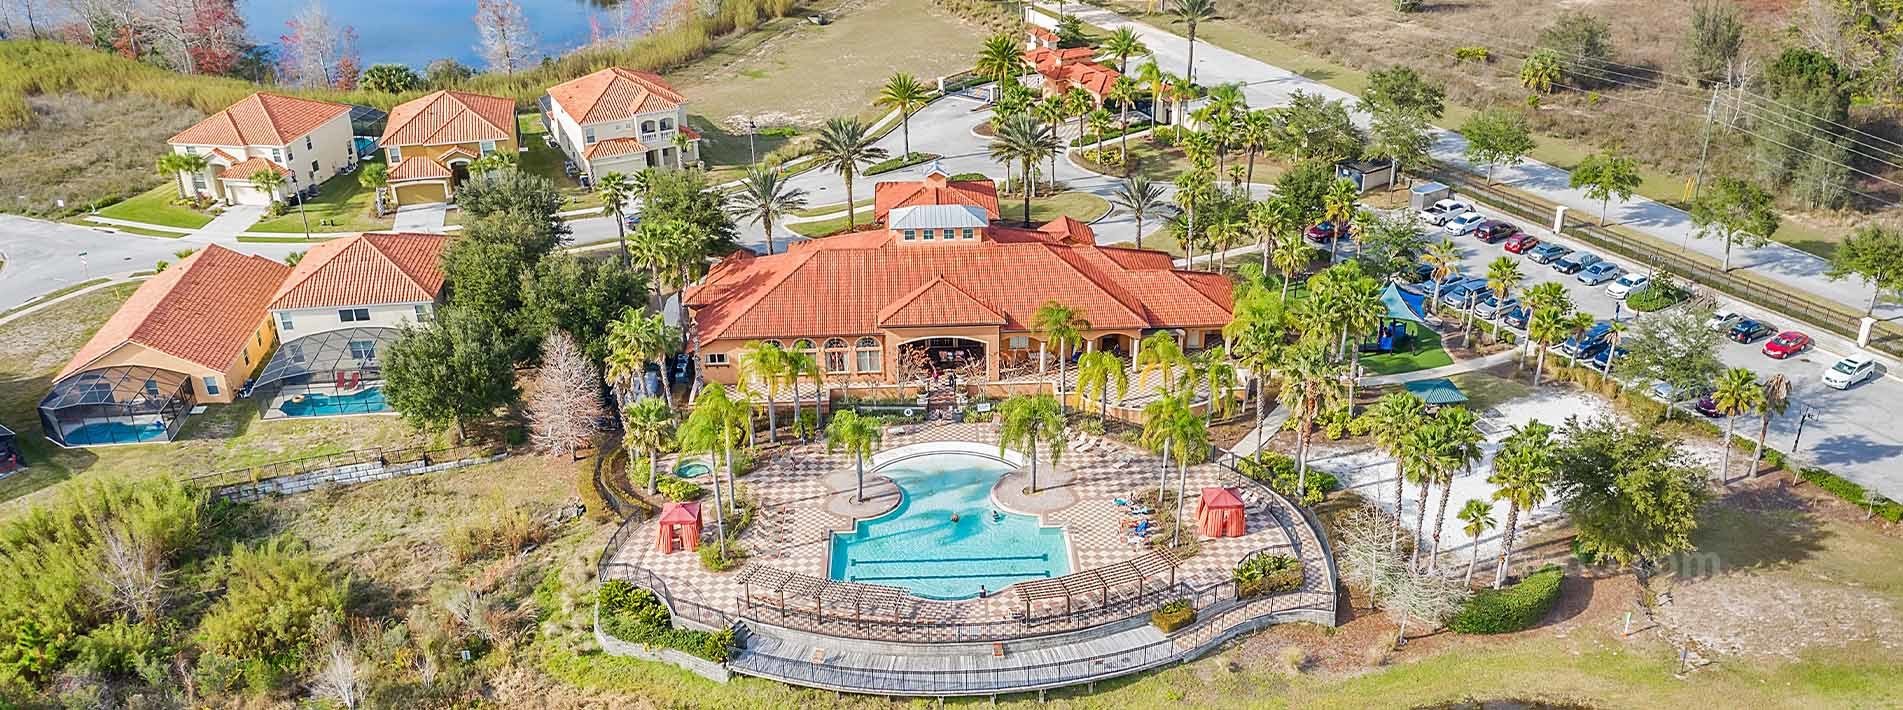 Aviana Resort Orlando Vacation Community 